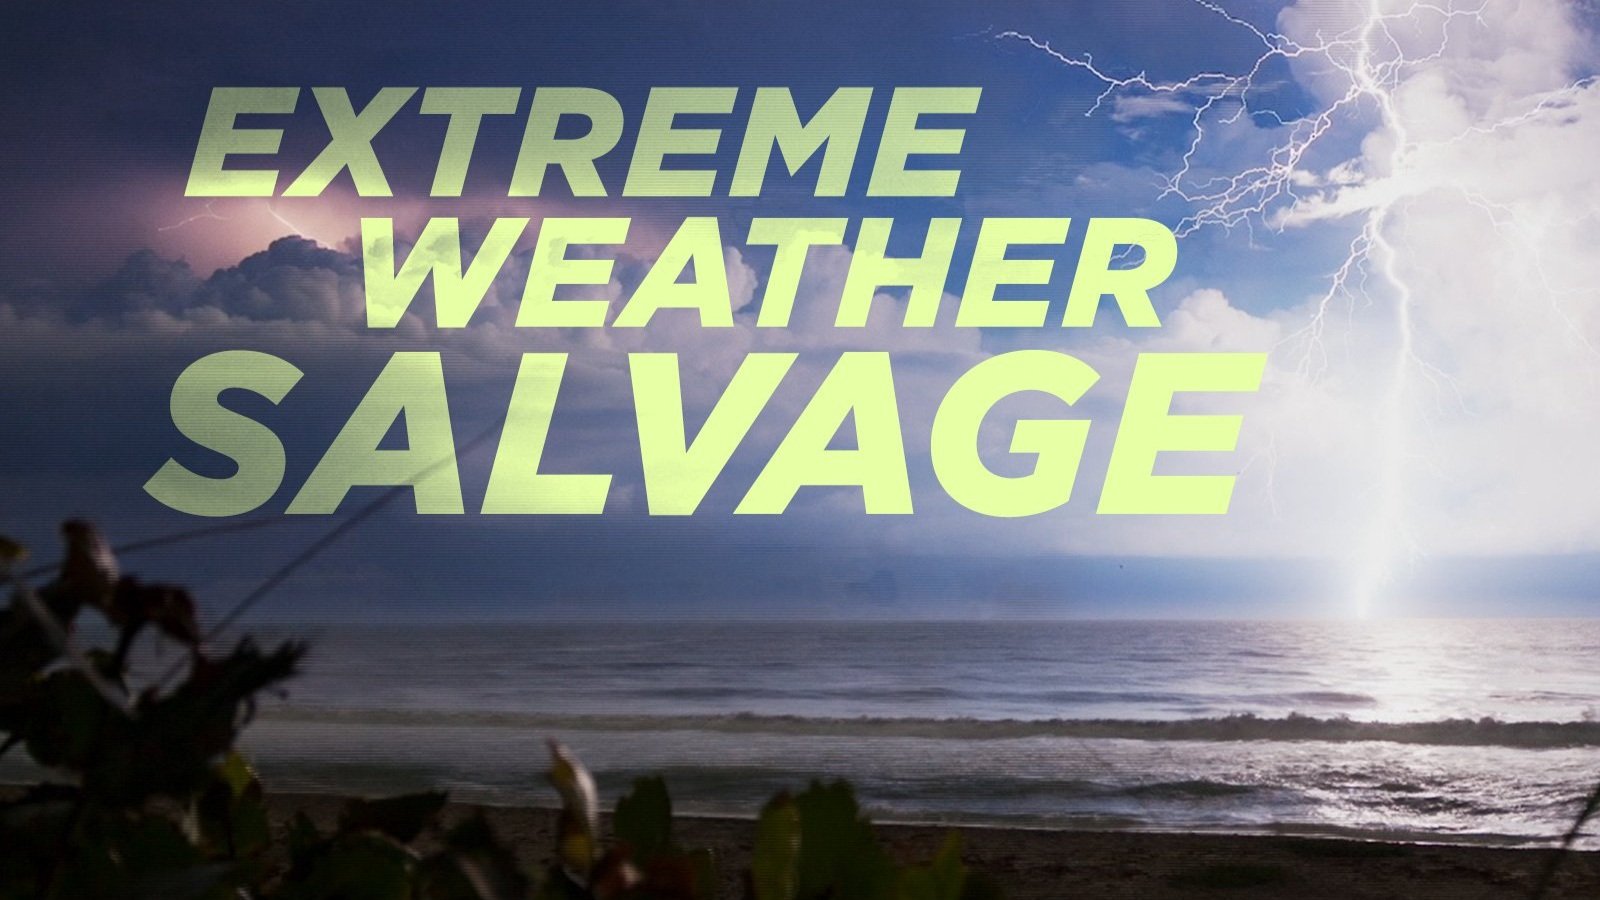 Extreme+weather+salvage.jpg